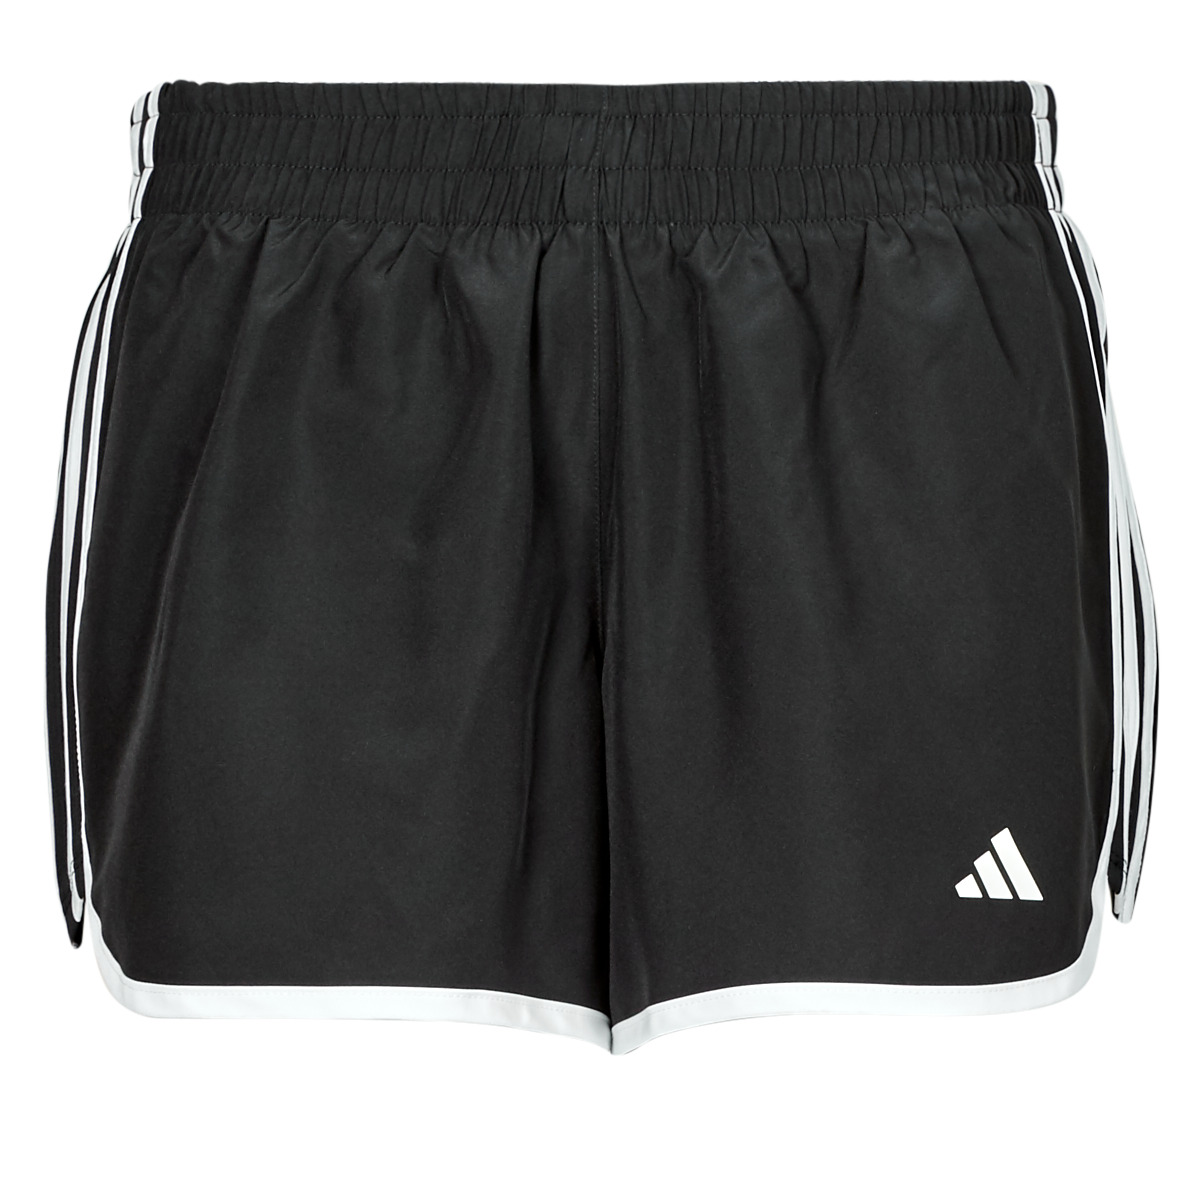 Clothing Women Shorts / Bermudas adidas Performance M20 SHORT Black / White